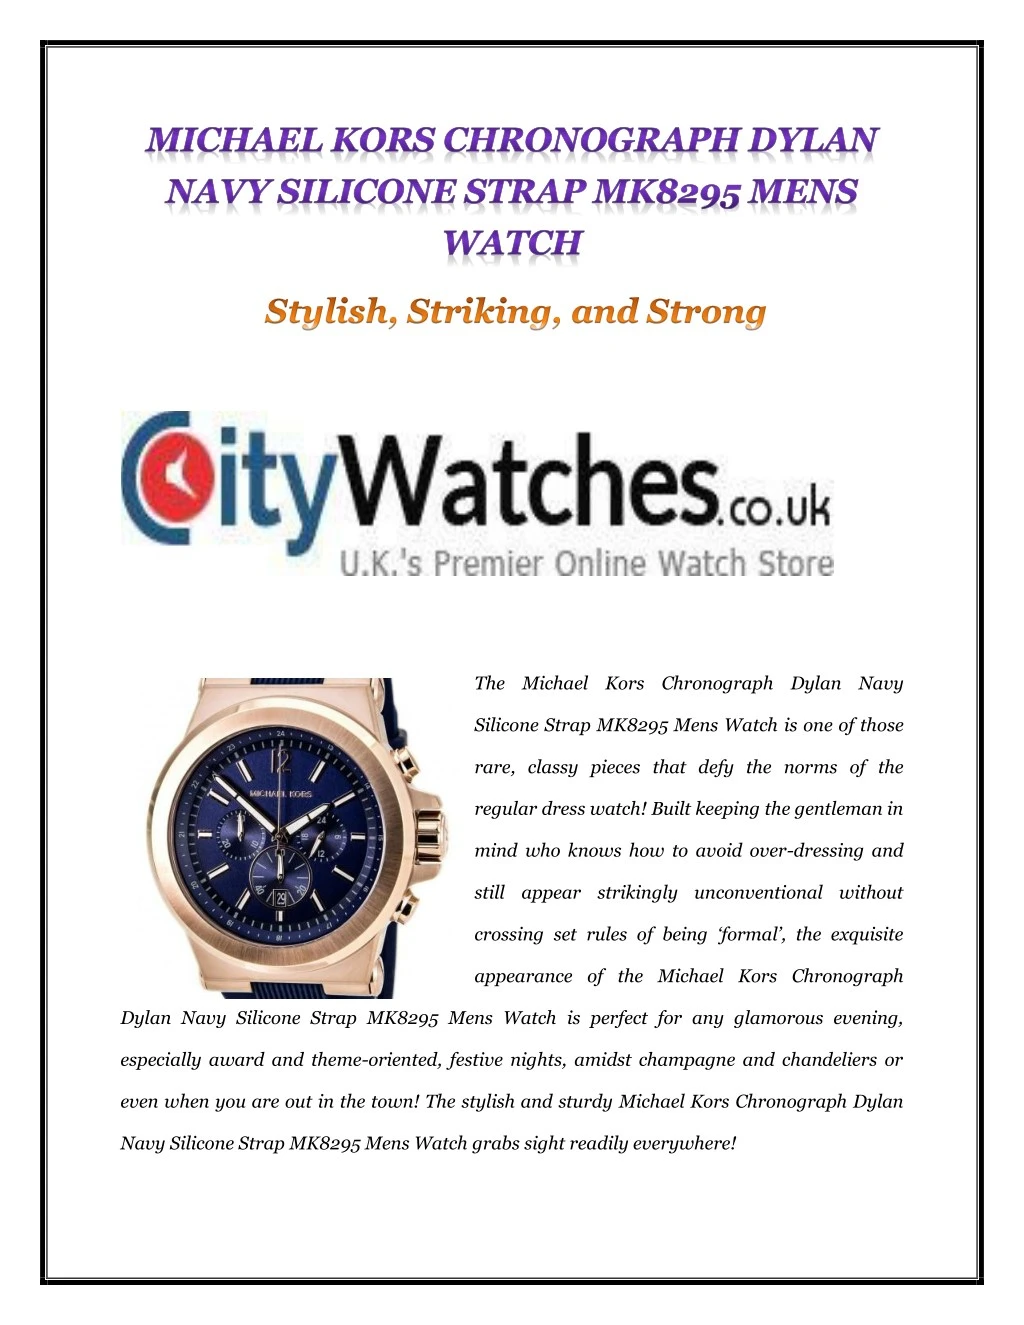 the michael kors chronograph dylan navy